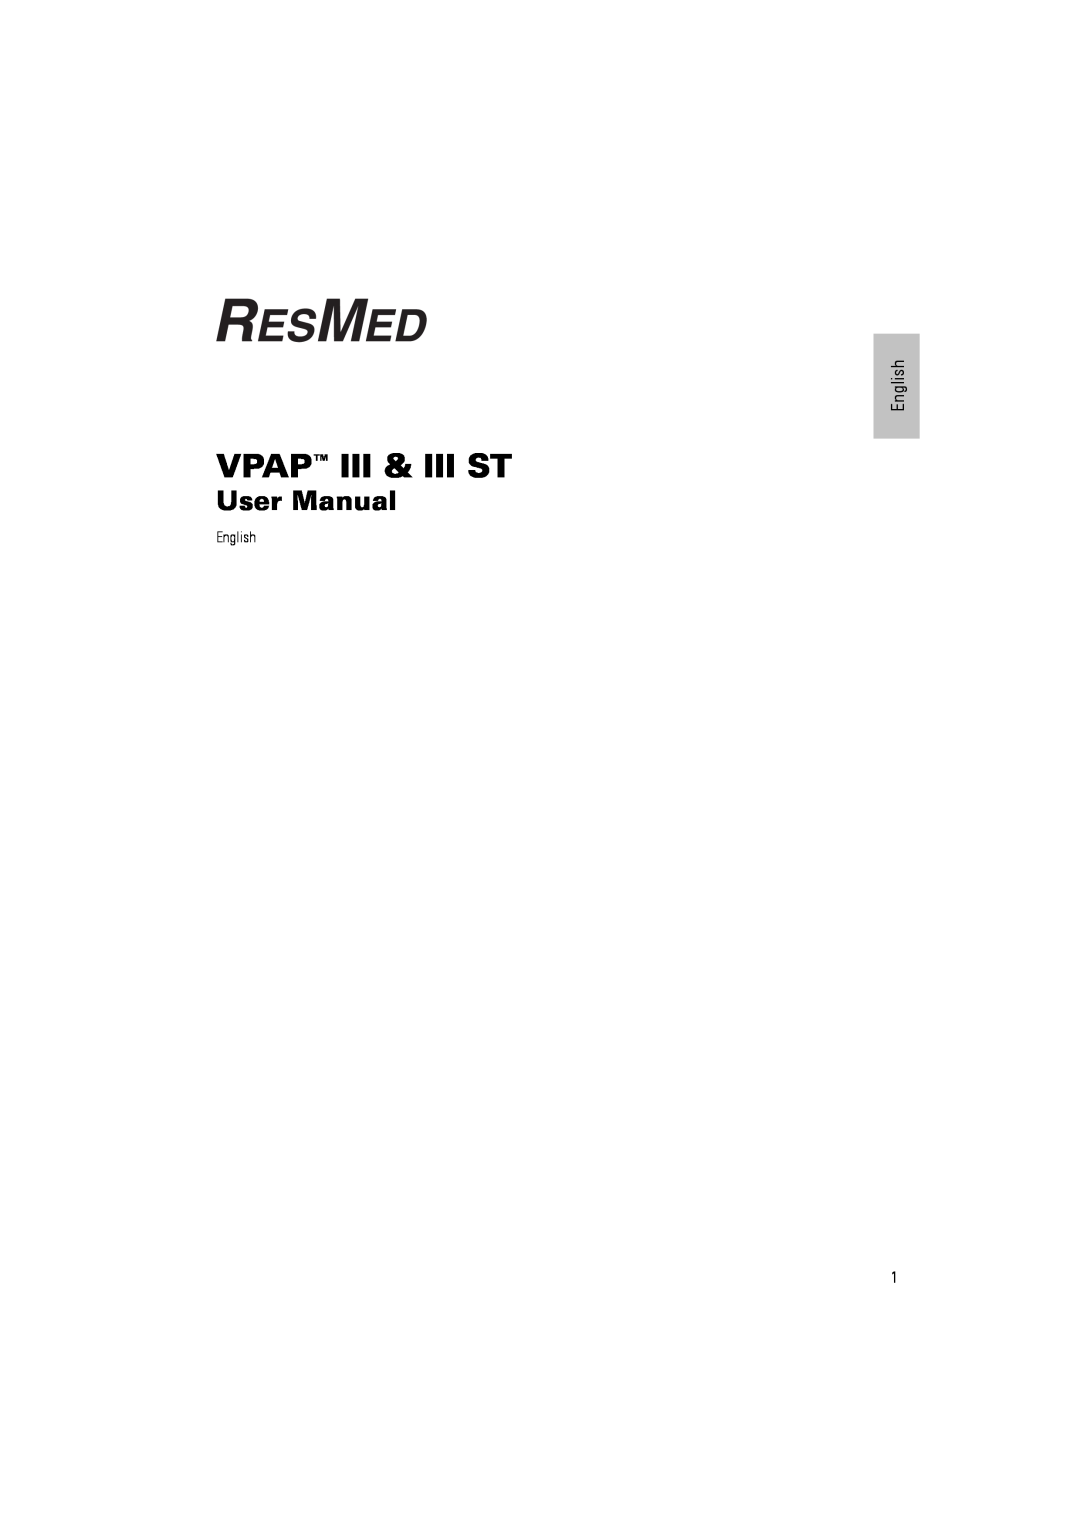 ResMed III & III ST user manual Vpap Iii & Iii St, User Manual, English 